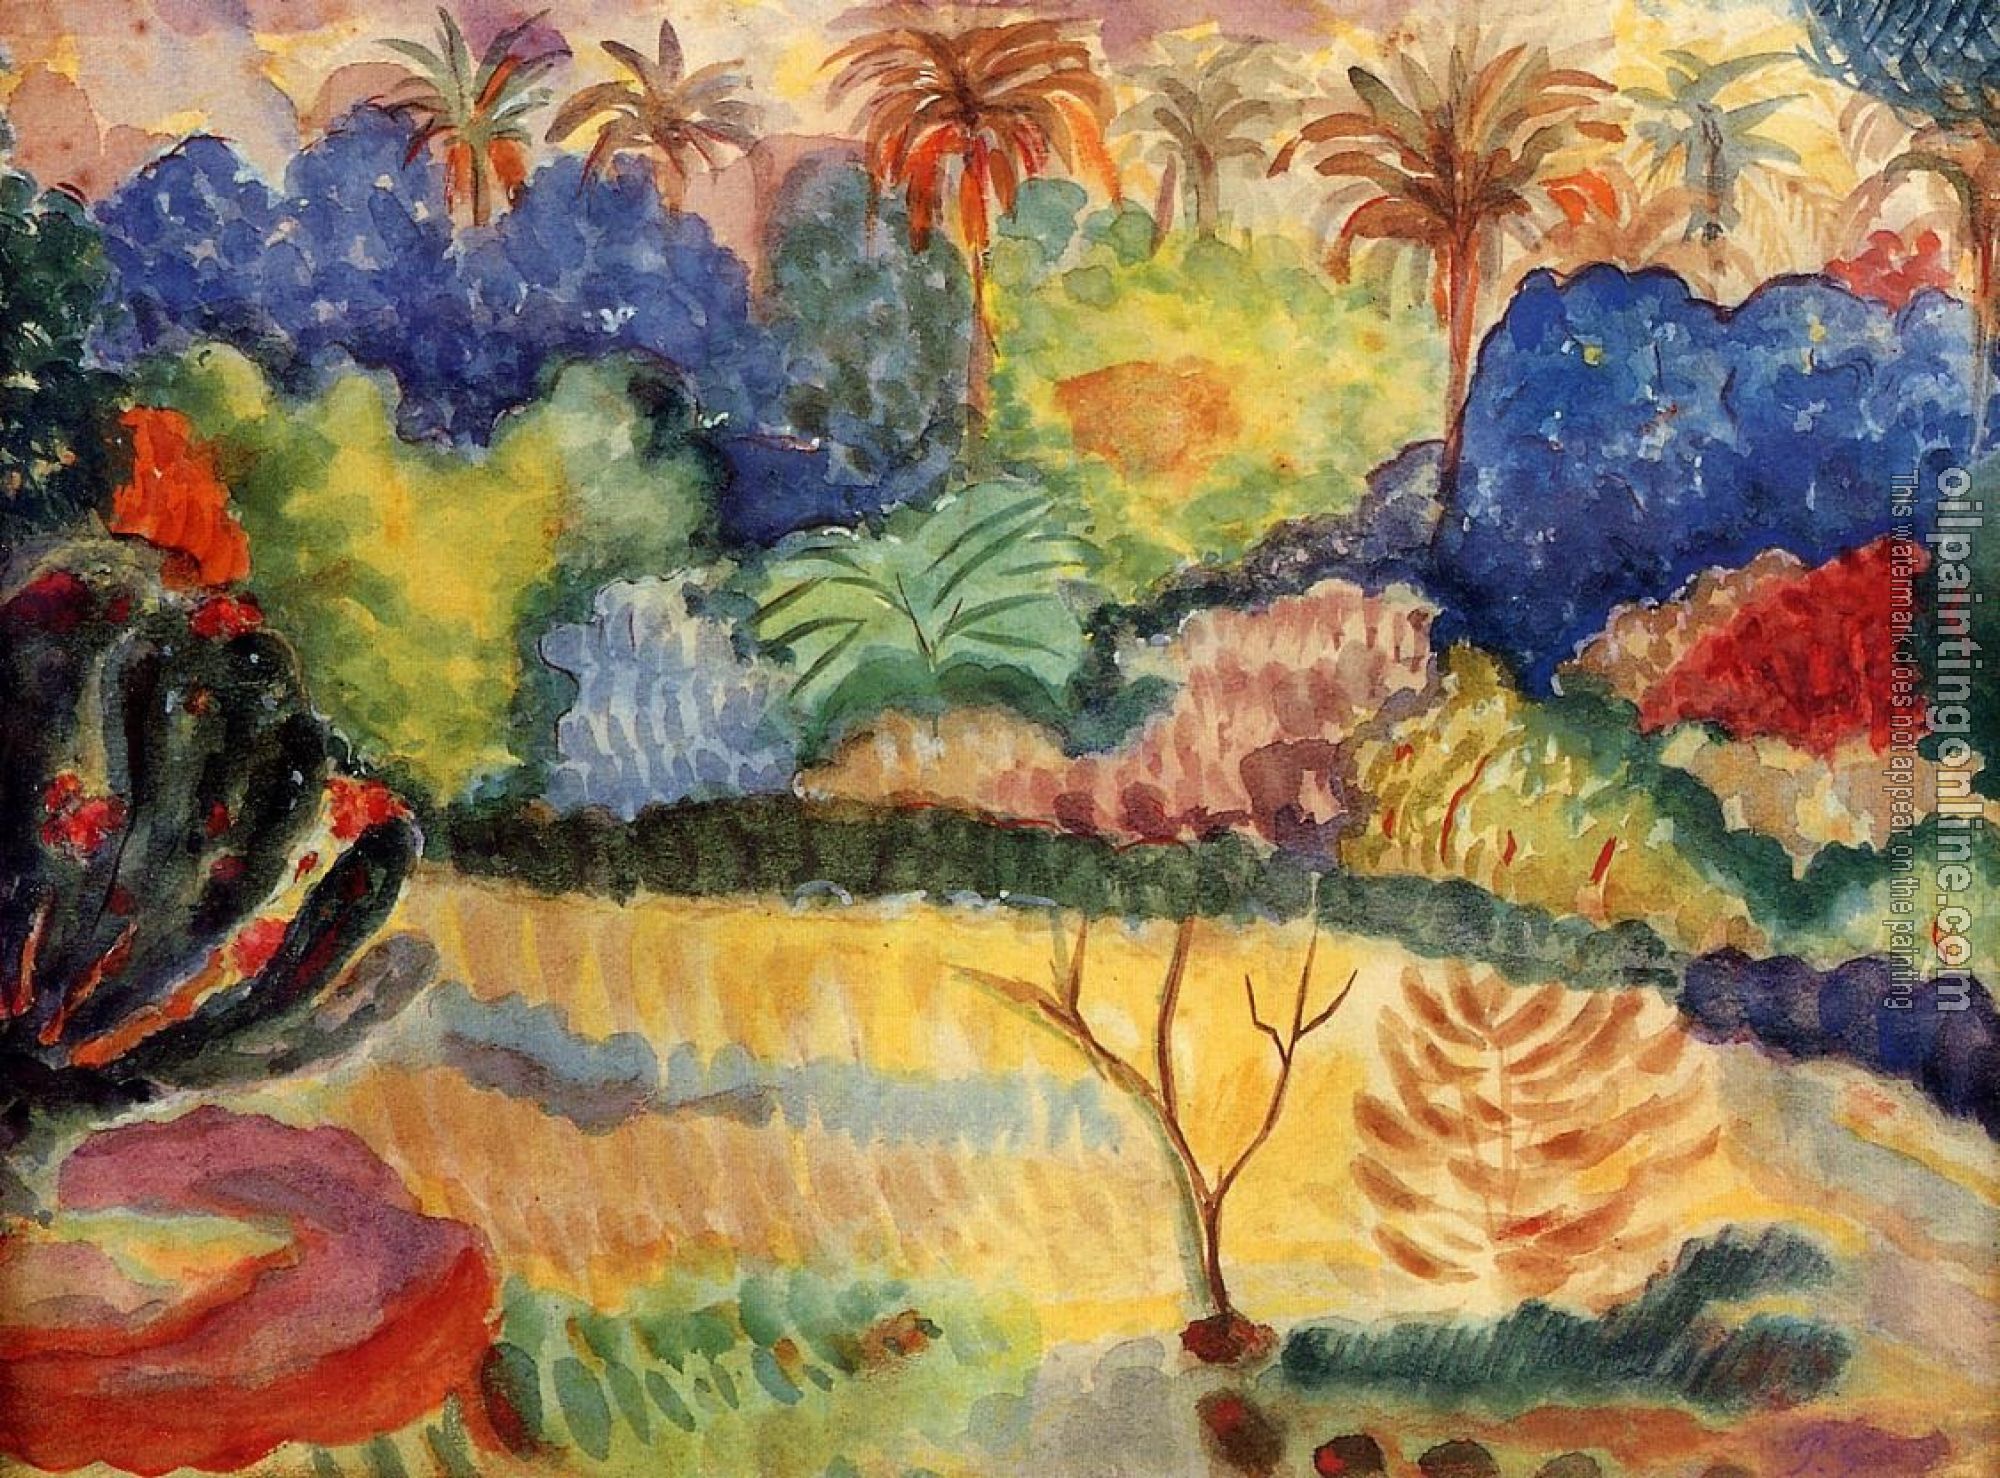 Gauguin, Paul - Tahitian Landscape